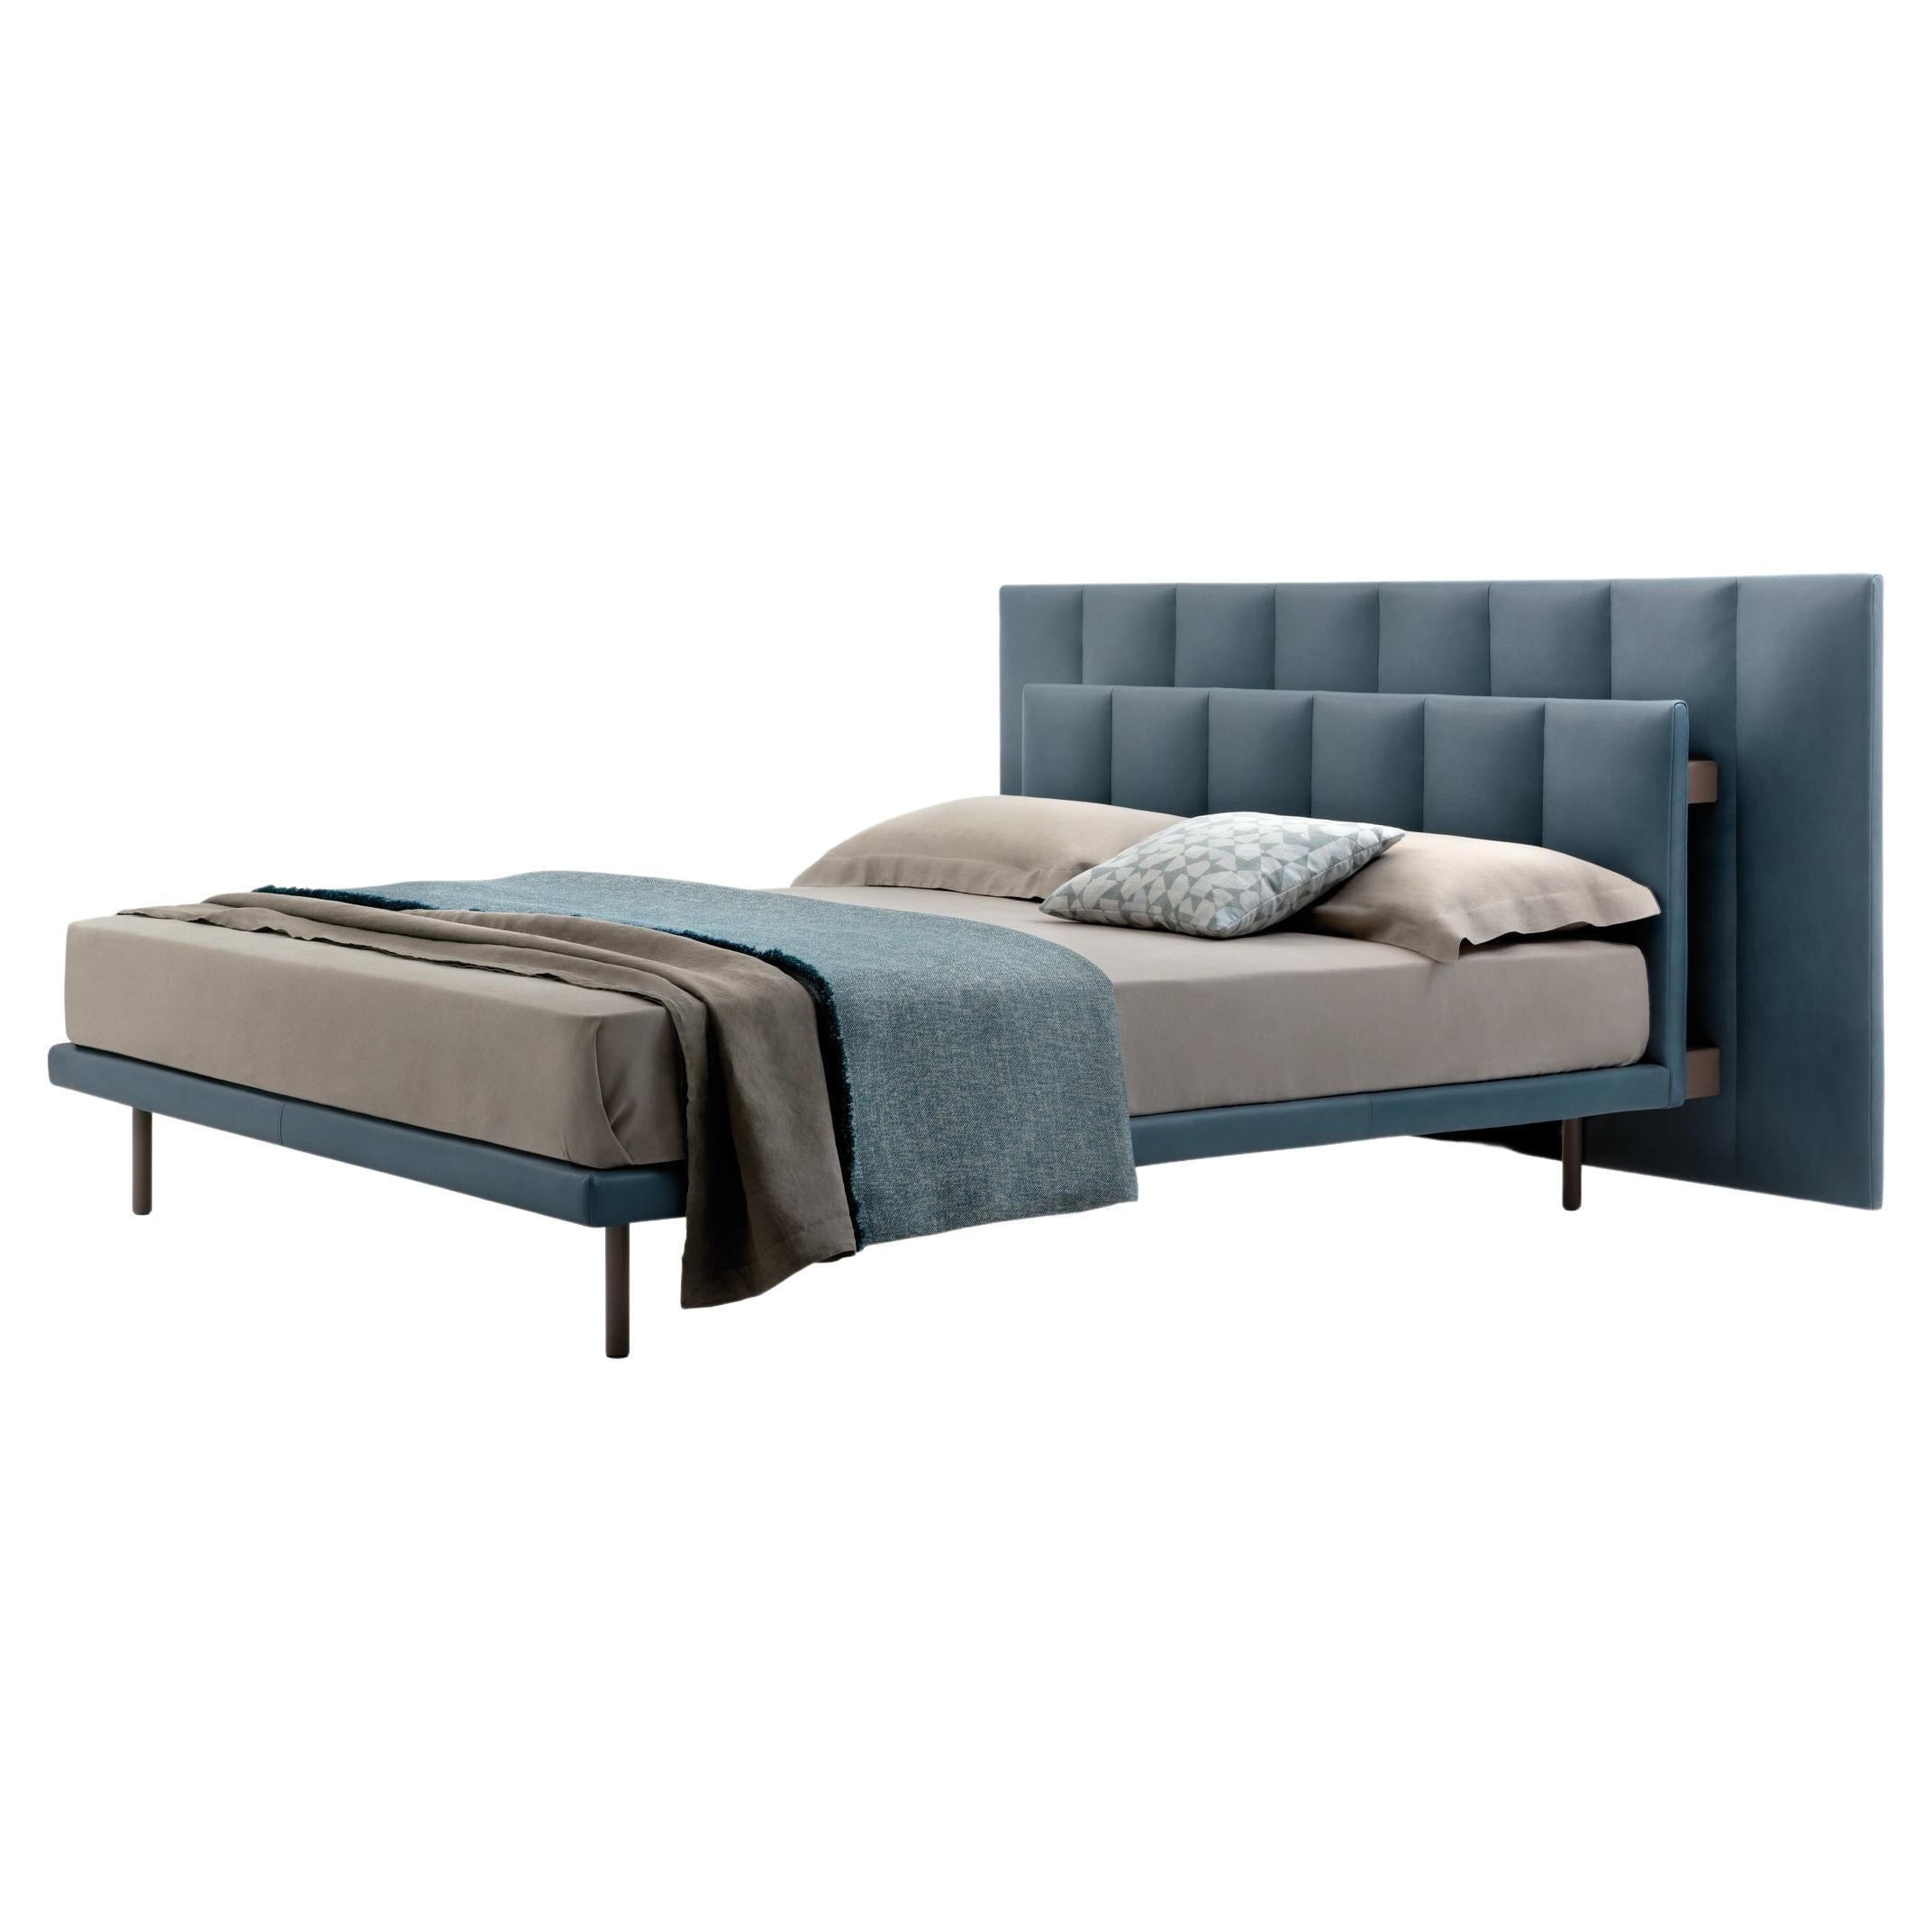 Zanotta Extra Large Grangala Bed with Single Springingin in Grey Upholstery